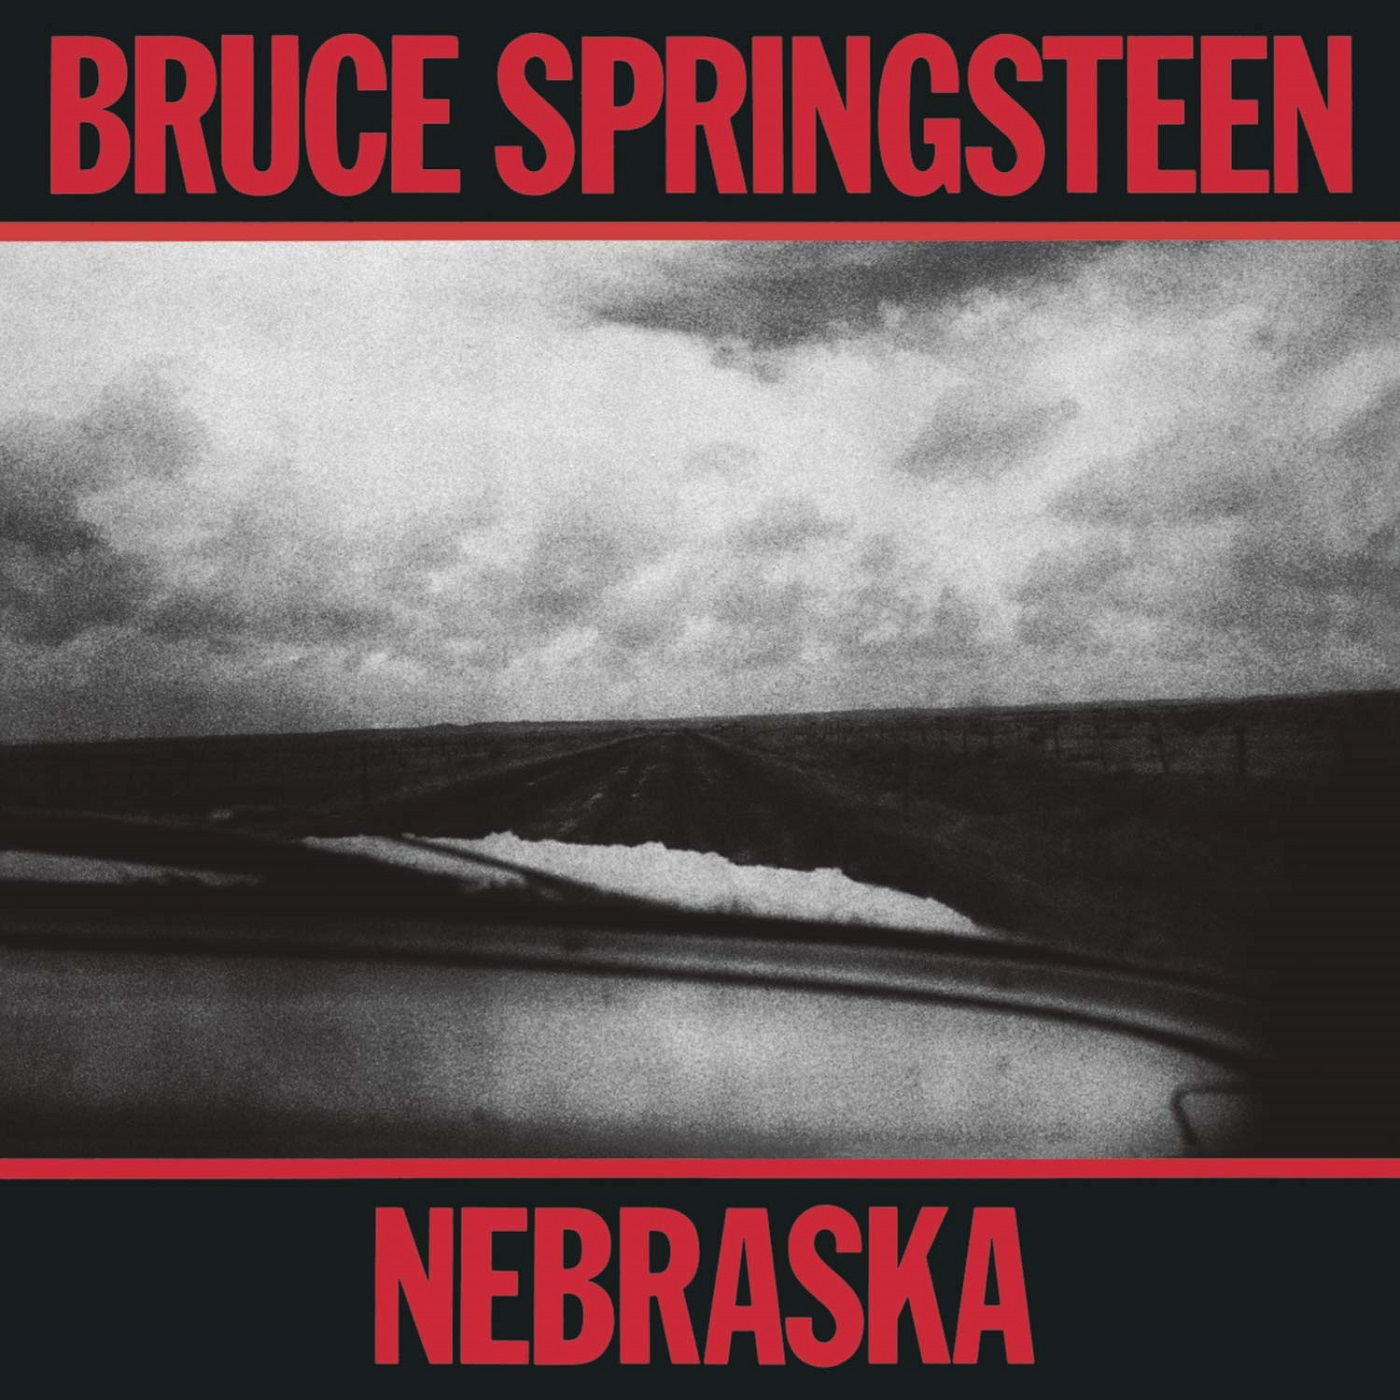 Bruce Springsteen’s “Nebraska” (with Karl Christian Kumpholz)